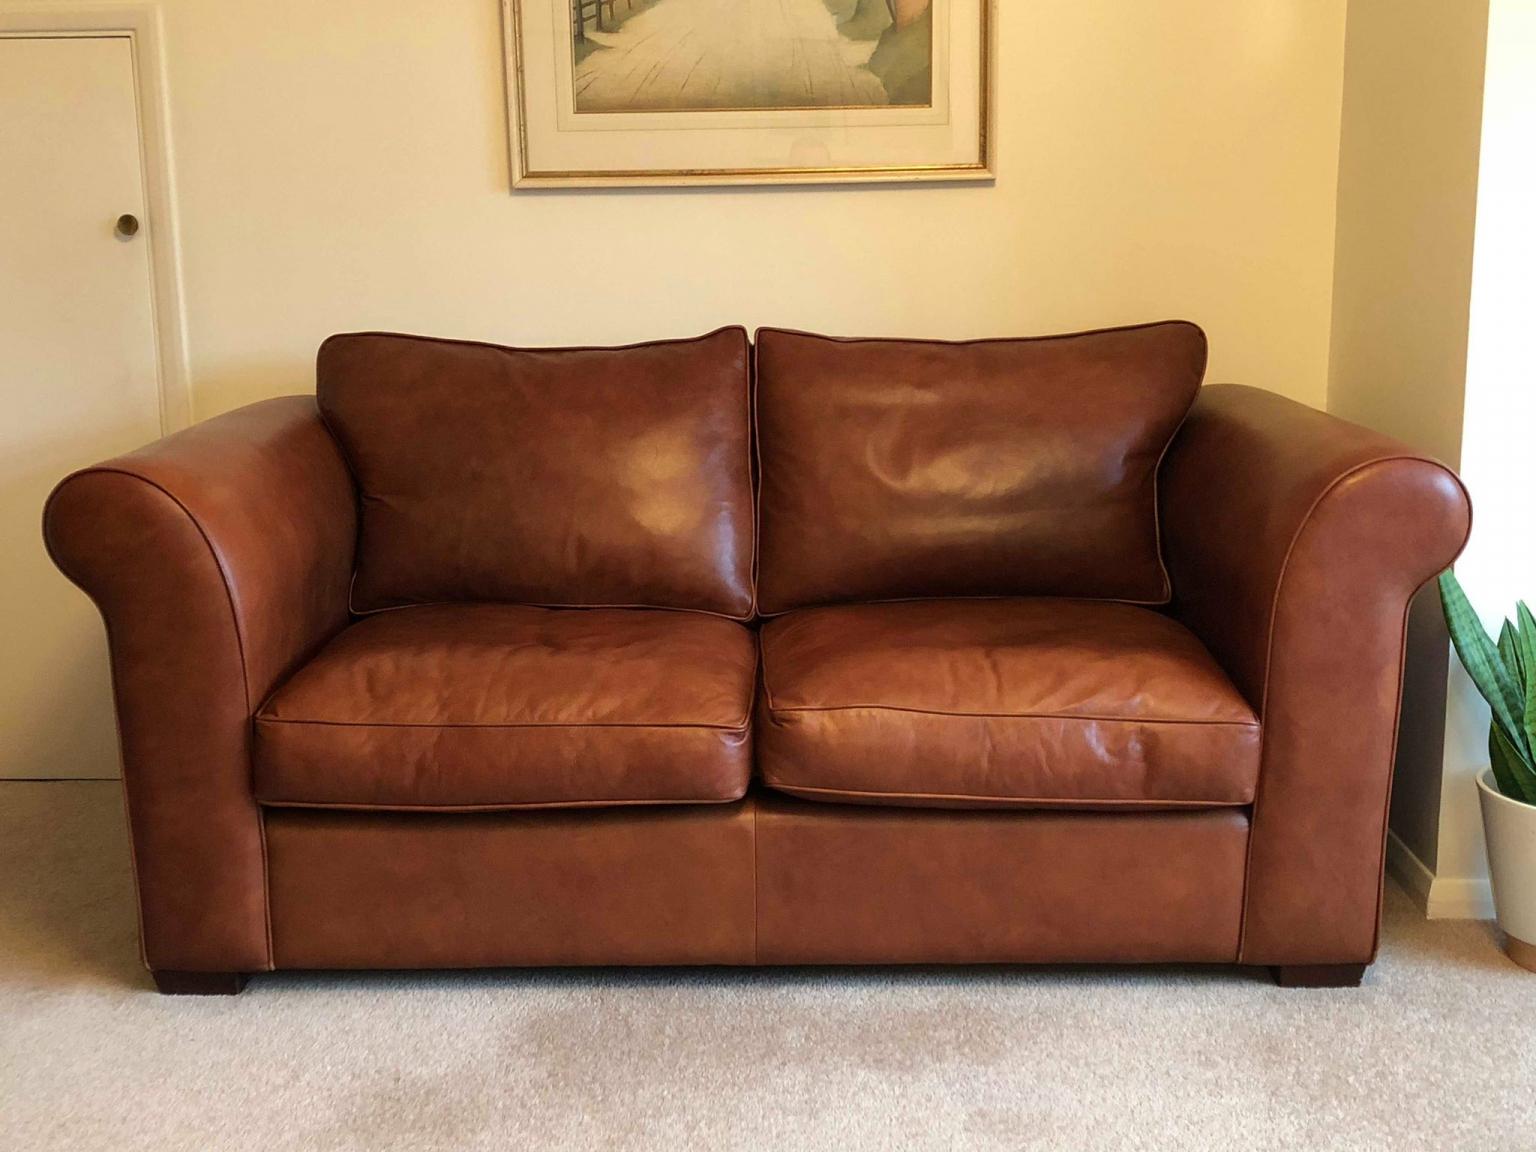 laura ashley brown leather sofa ebay